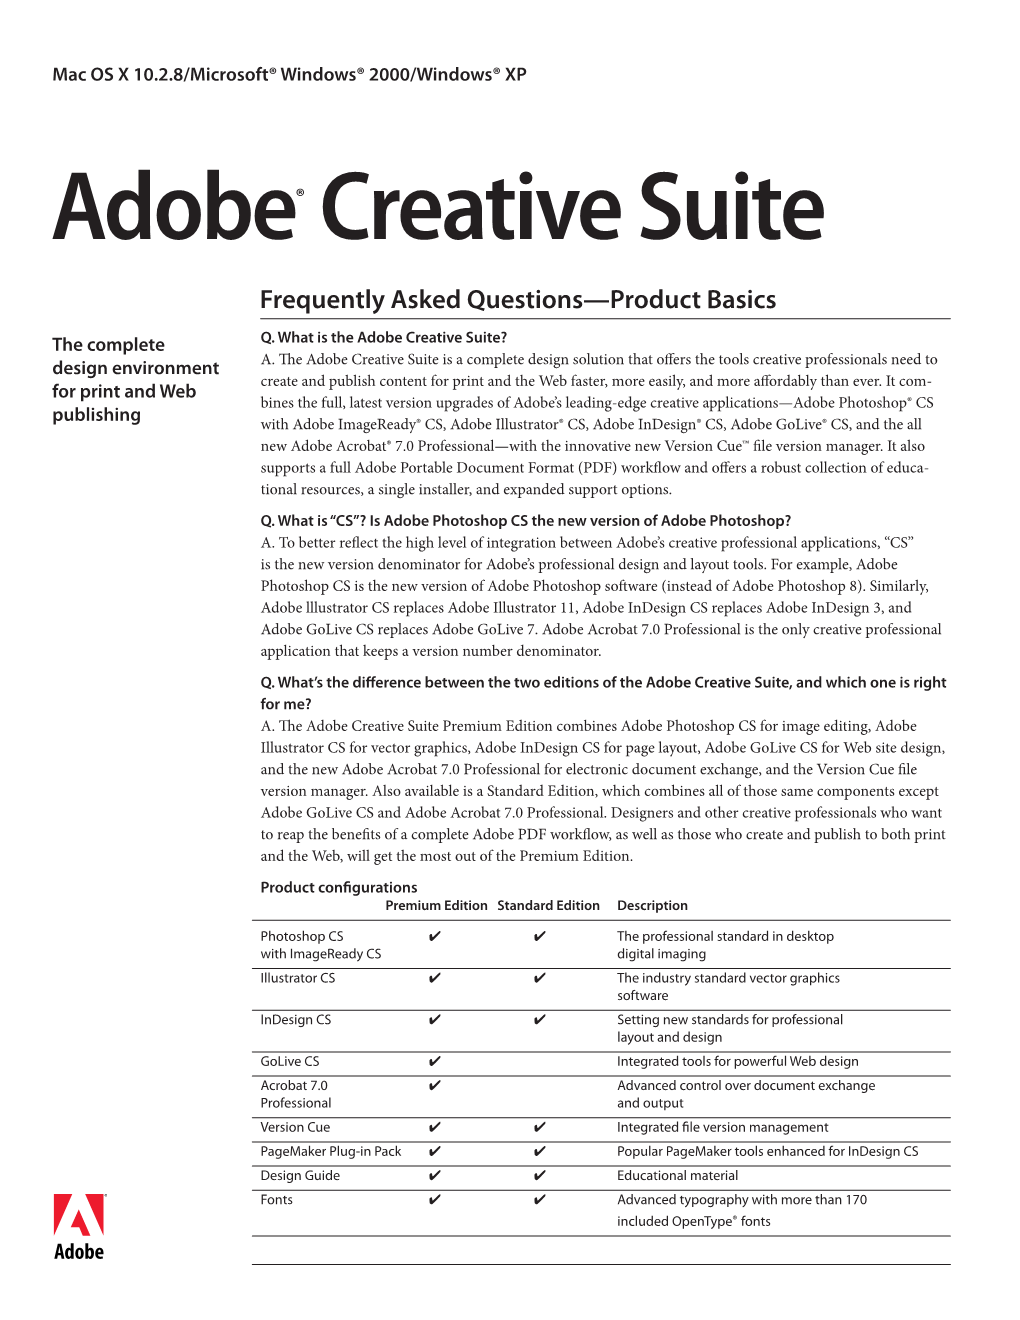 Adobe® Creative Suite